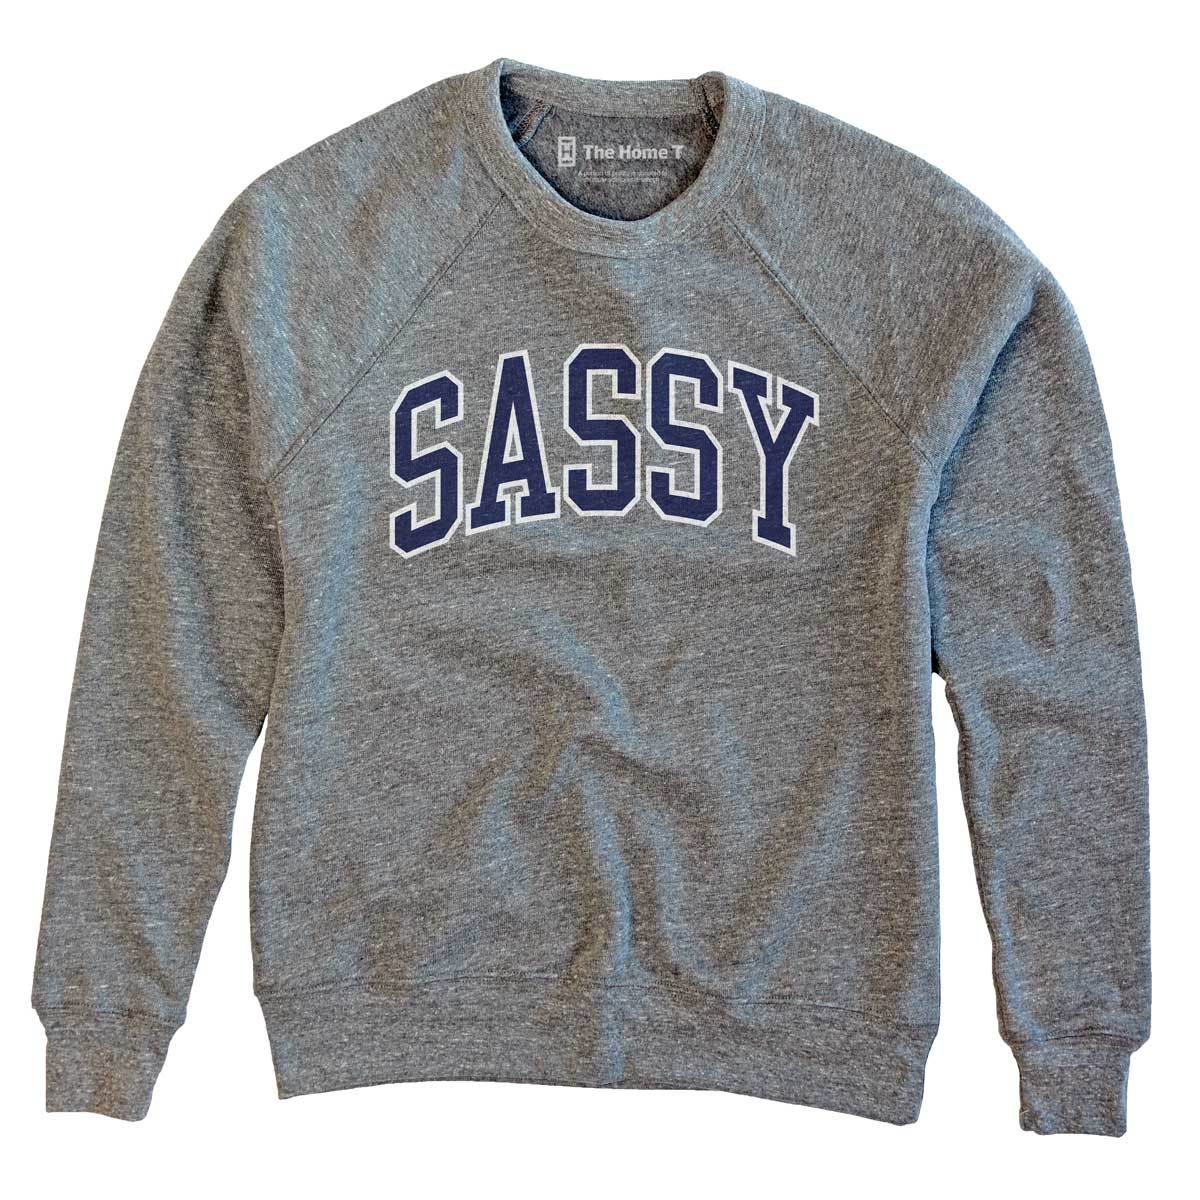 Sassy Crew neck The Home T XS Grey Sweatshirt